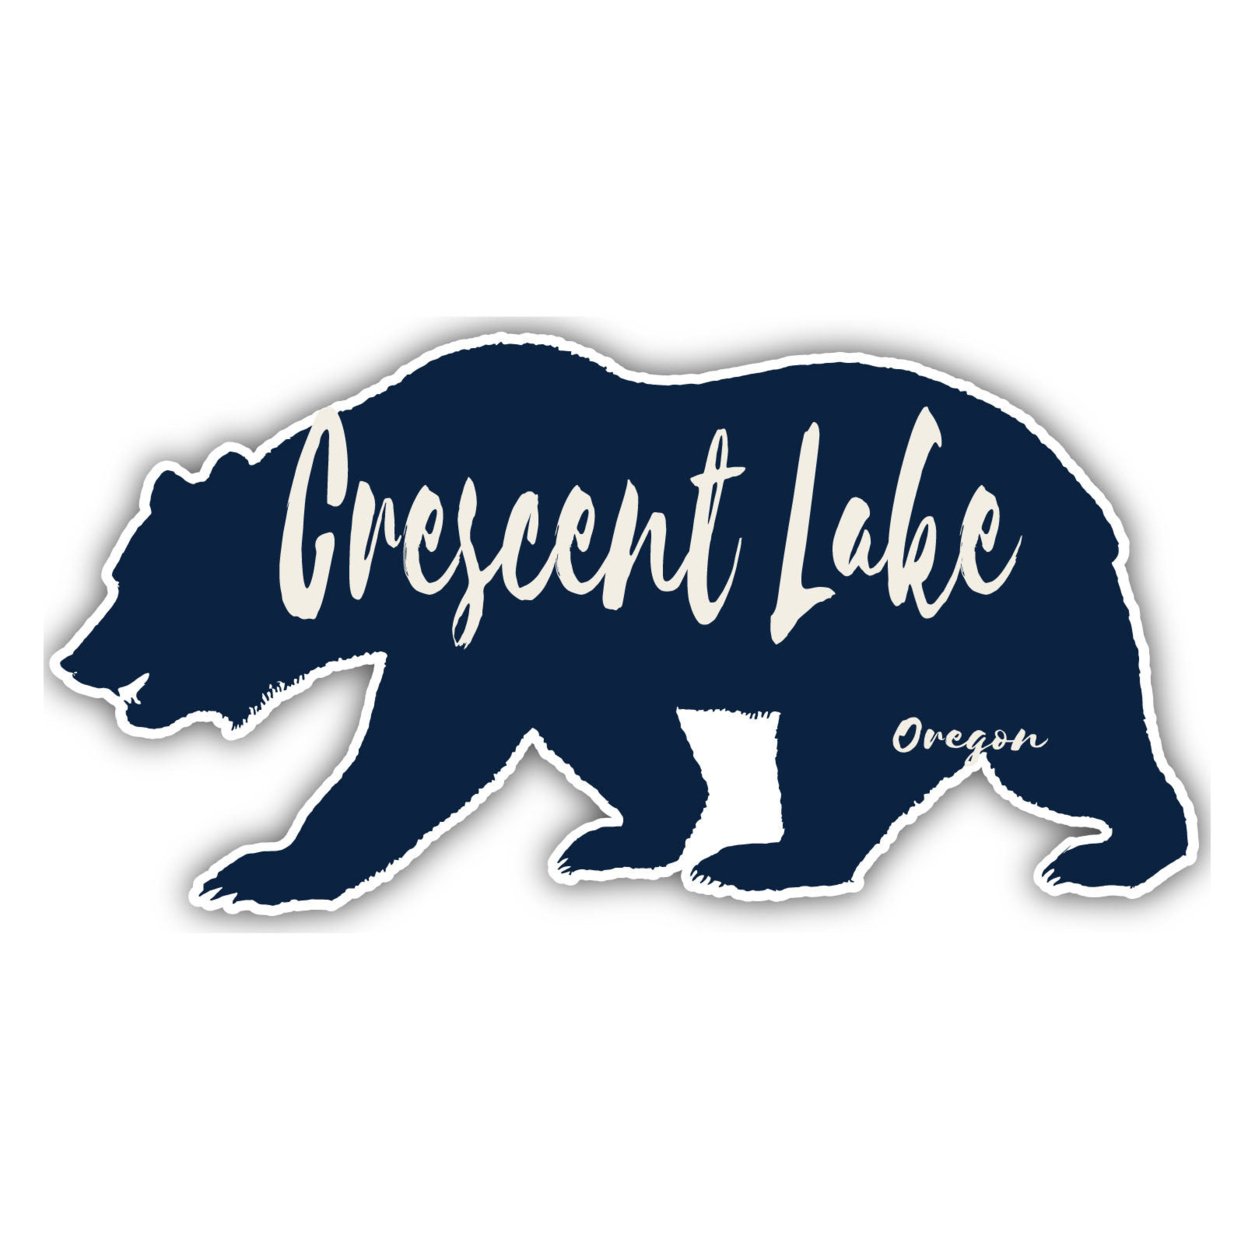 Crescent Lake Oregon Souvenir Decorative Stickers (Choose Theme And Size) - Single Unit, 10-Inch, Tent